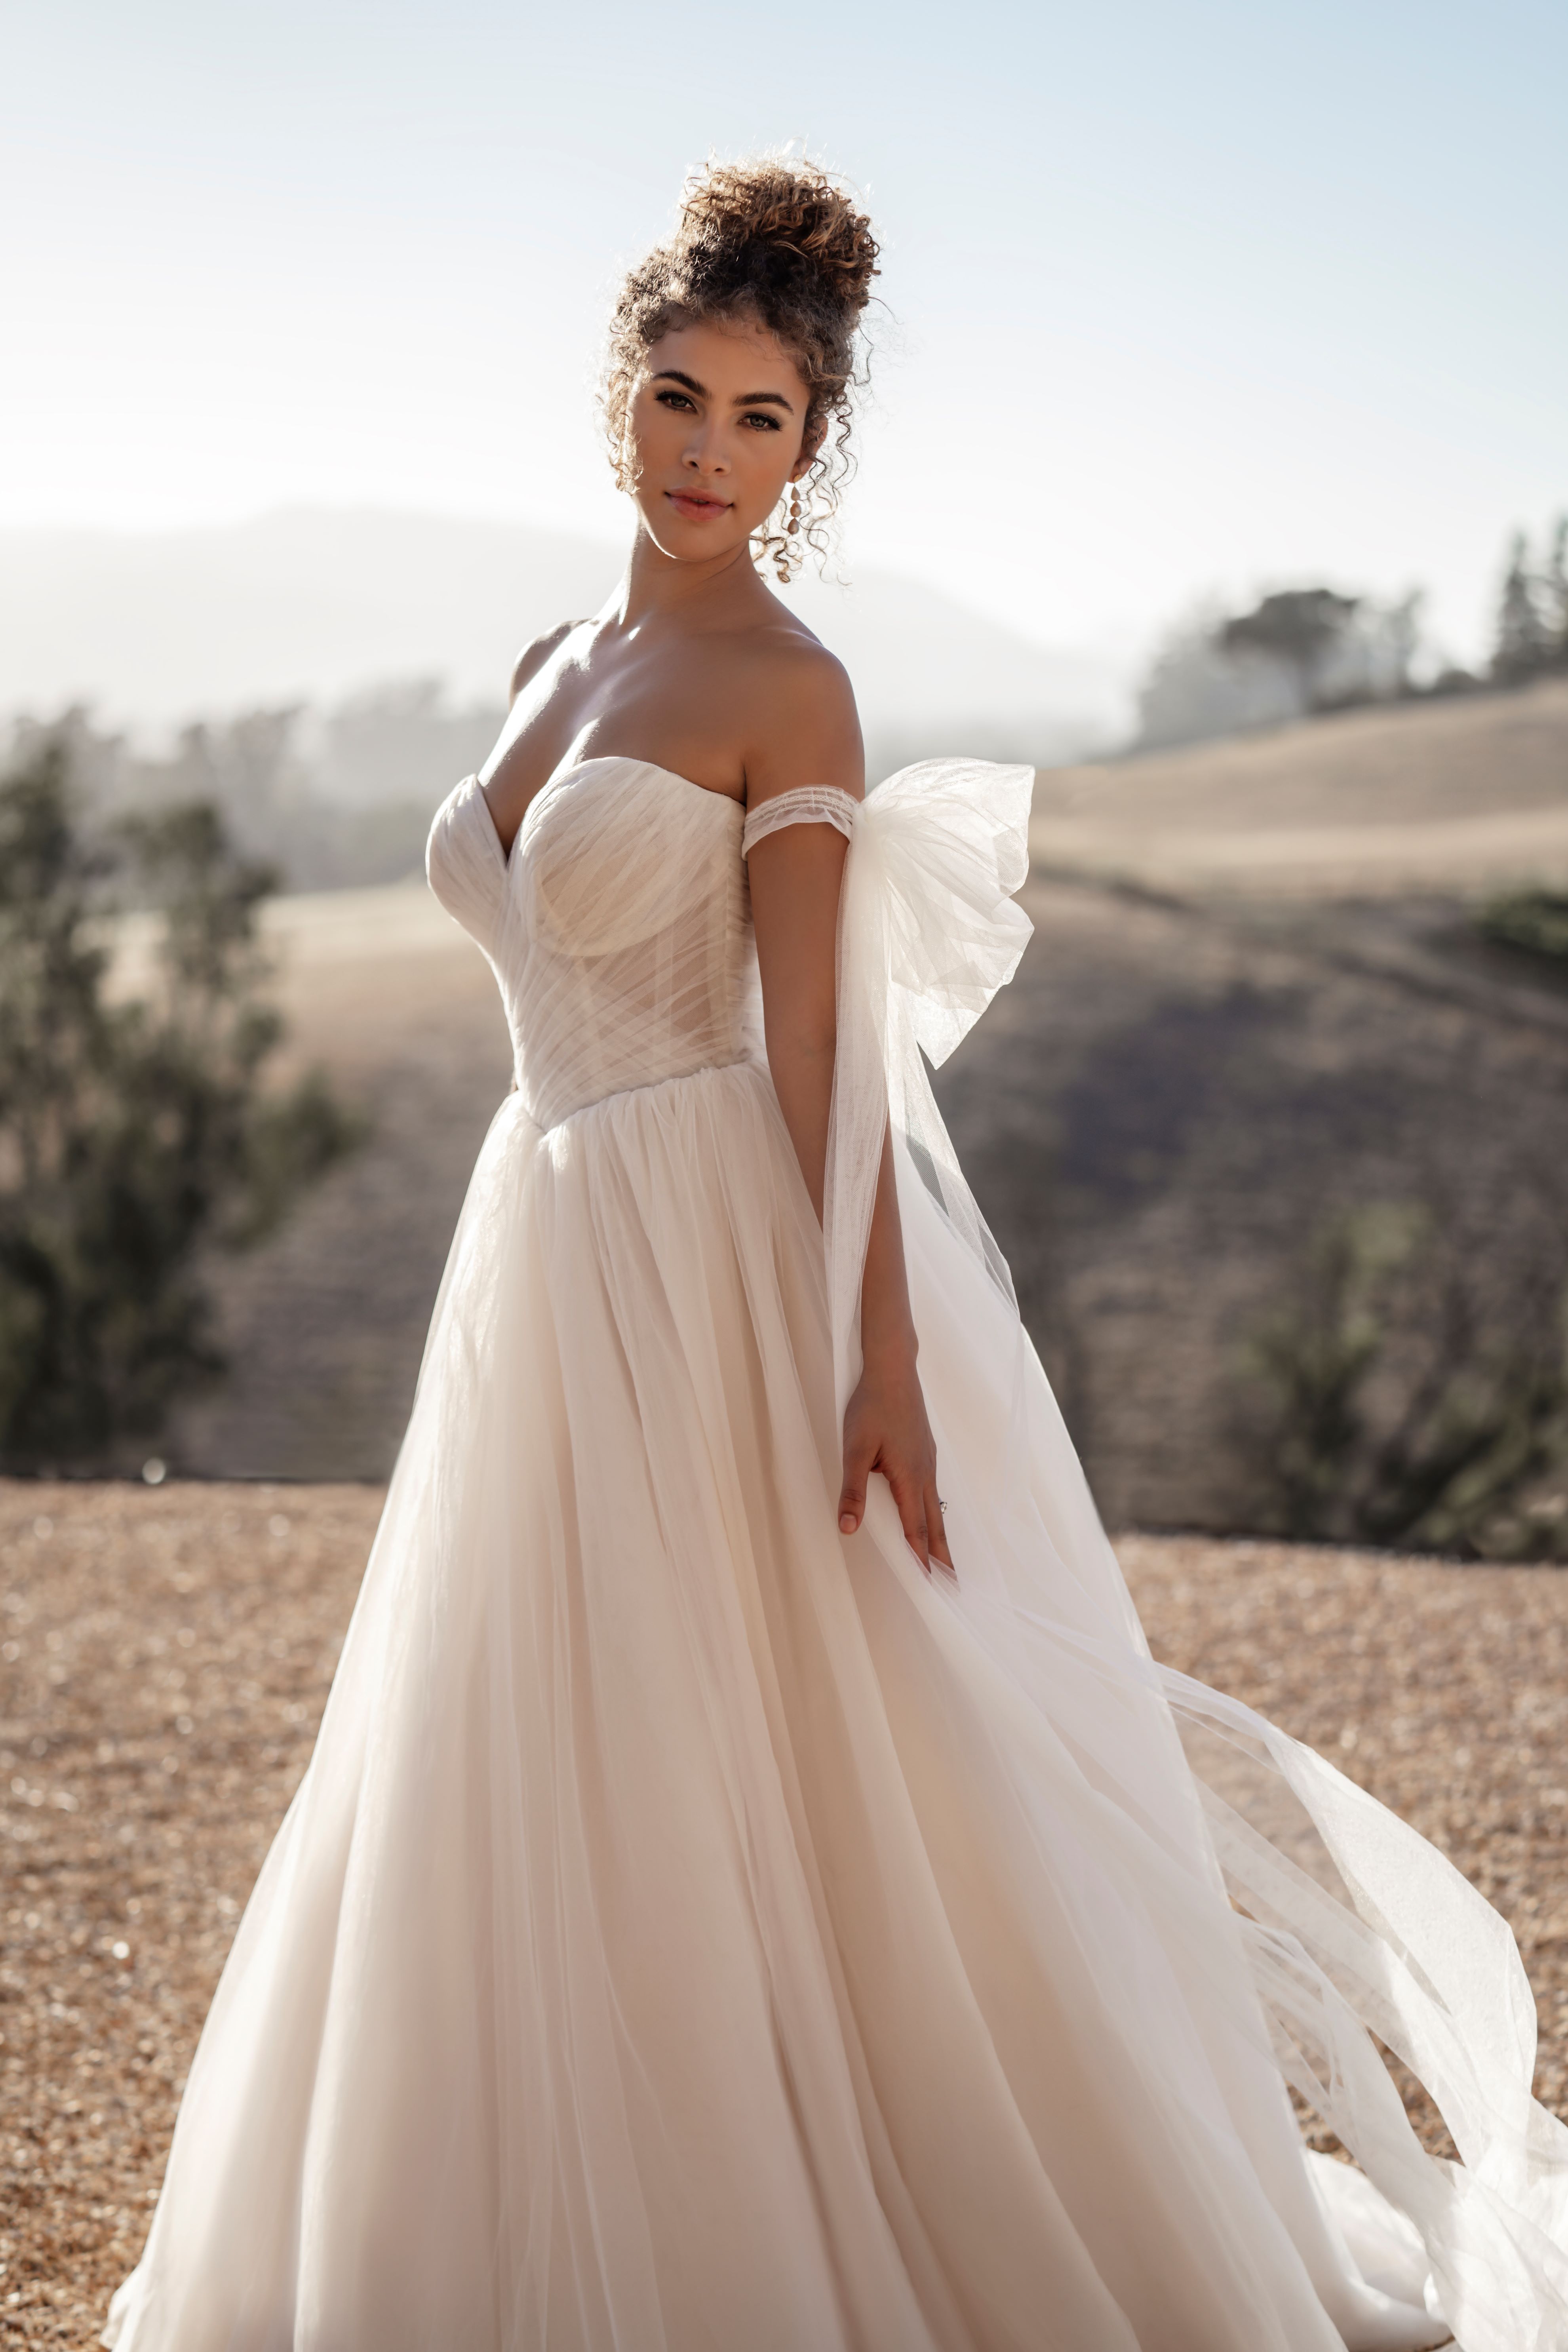 Sparkly & Glitter Wedding Dresses - Largest Selection - Kleinfeld |  Kleinfeld Bridal